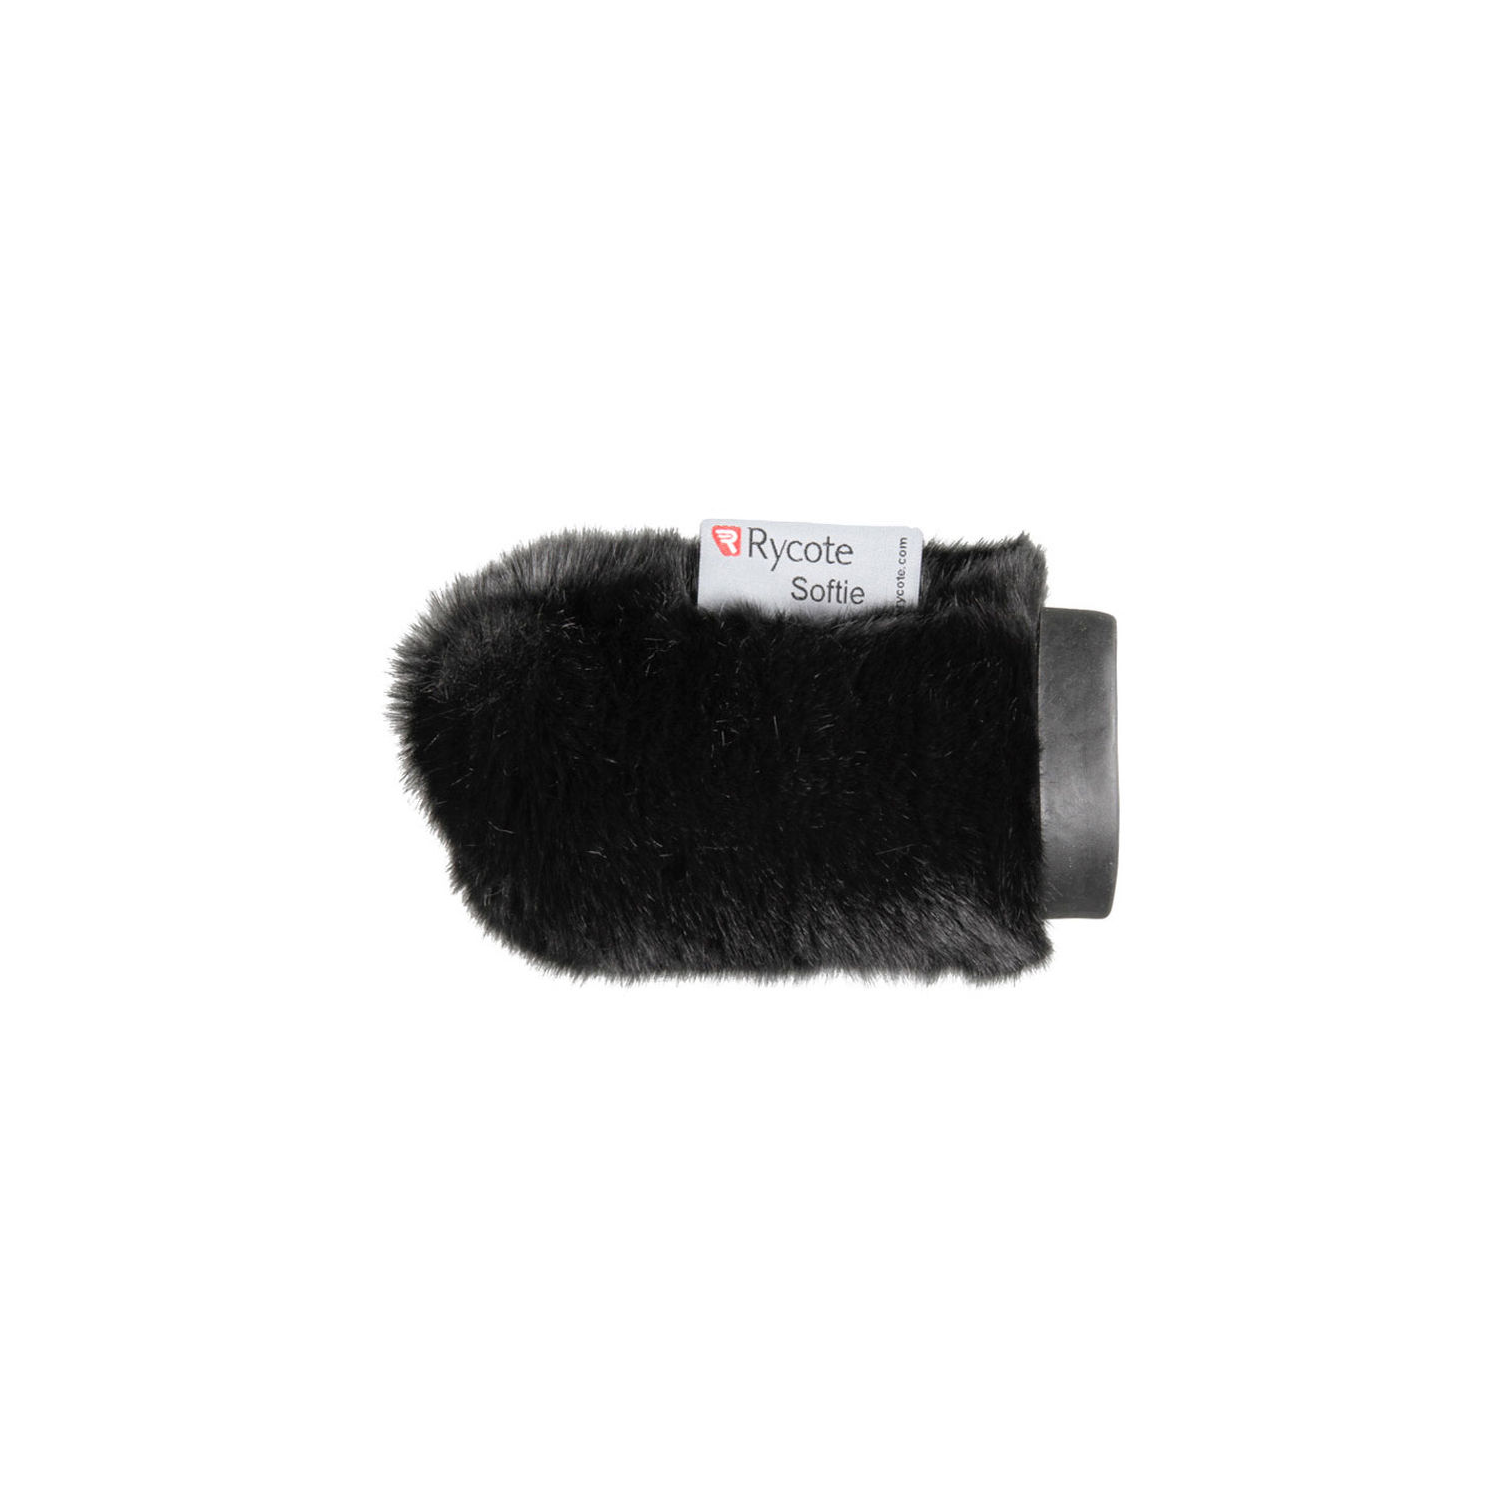 Rycote 7cm Short Fur Softie, Black (19/22)